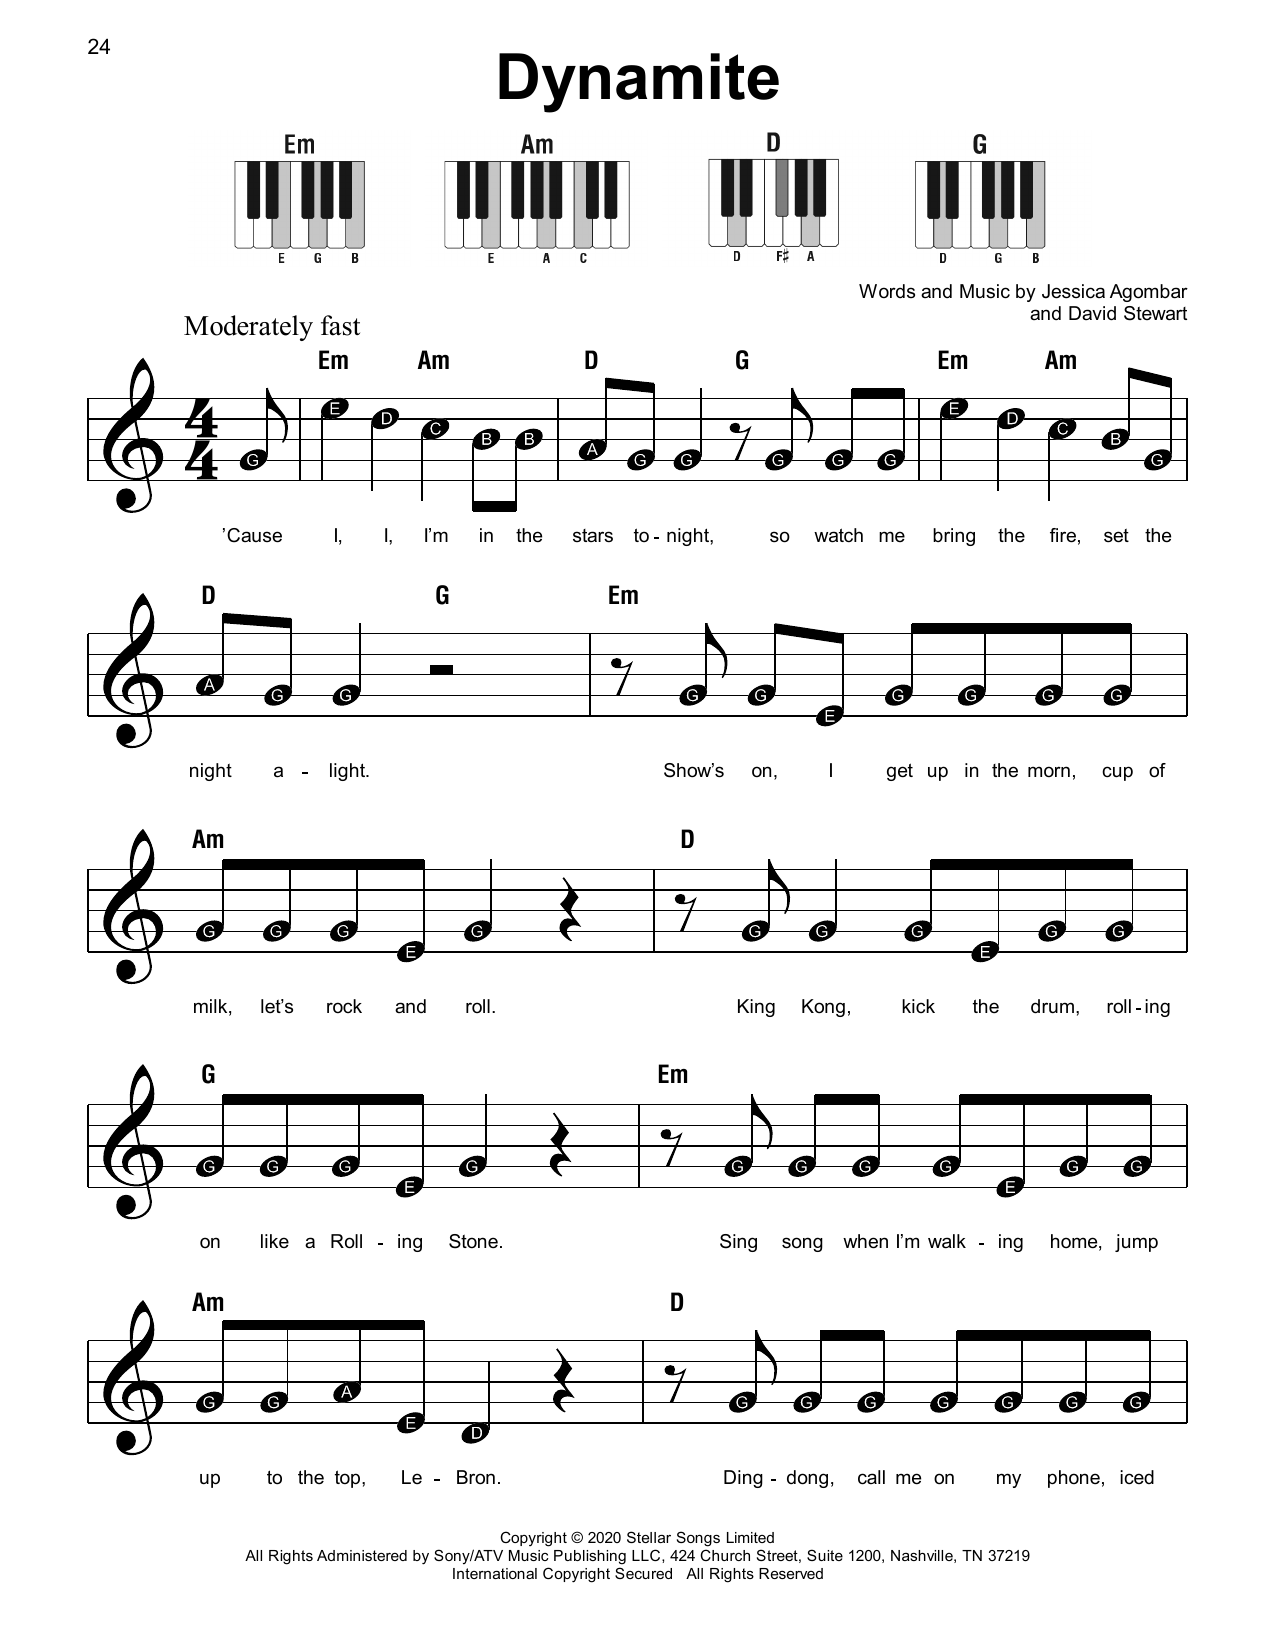 Dynamite Sheet Music BTS Super Easy Piano - Dynamite Piano Sheet Music Free Printable